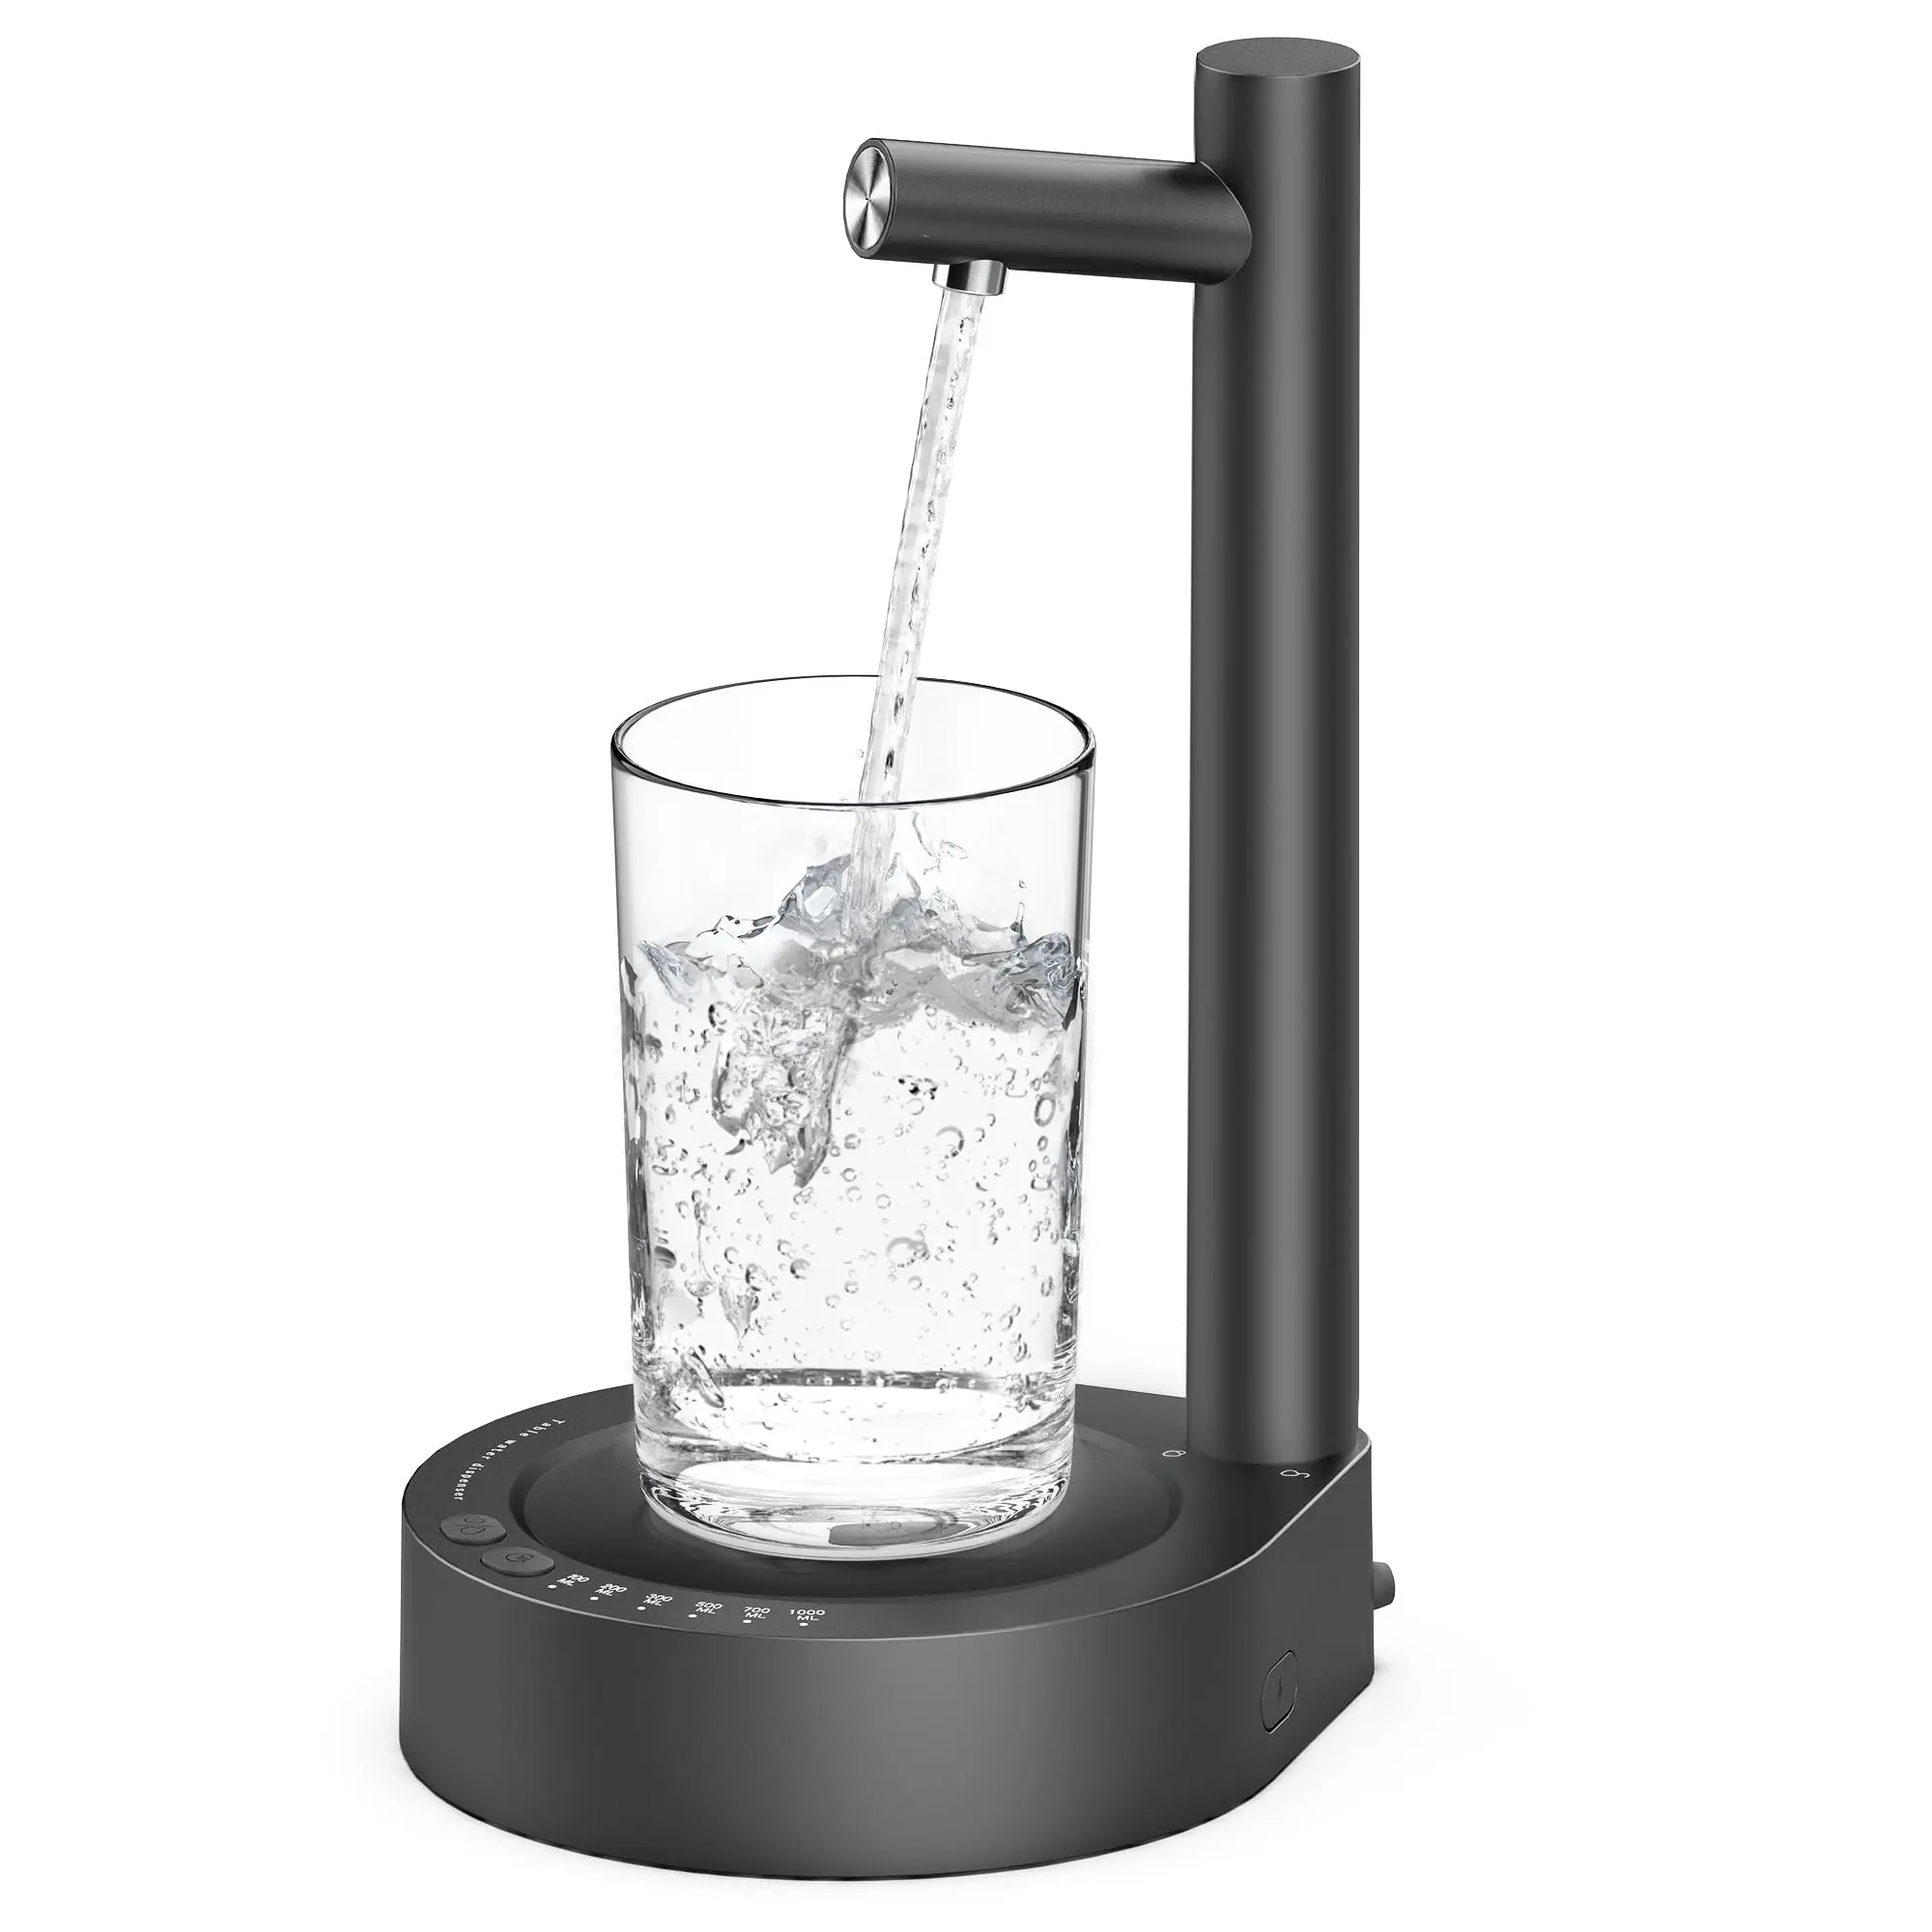 dispensador de agua inteligente - Cuánto tiempo dura un dispensador de agua